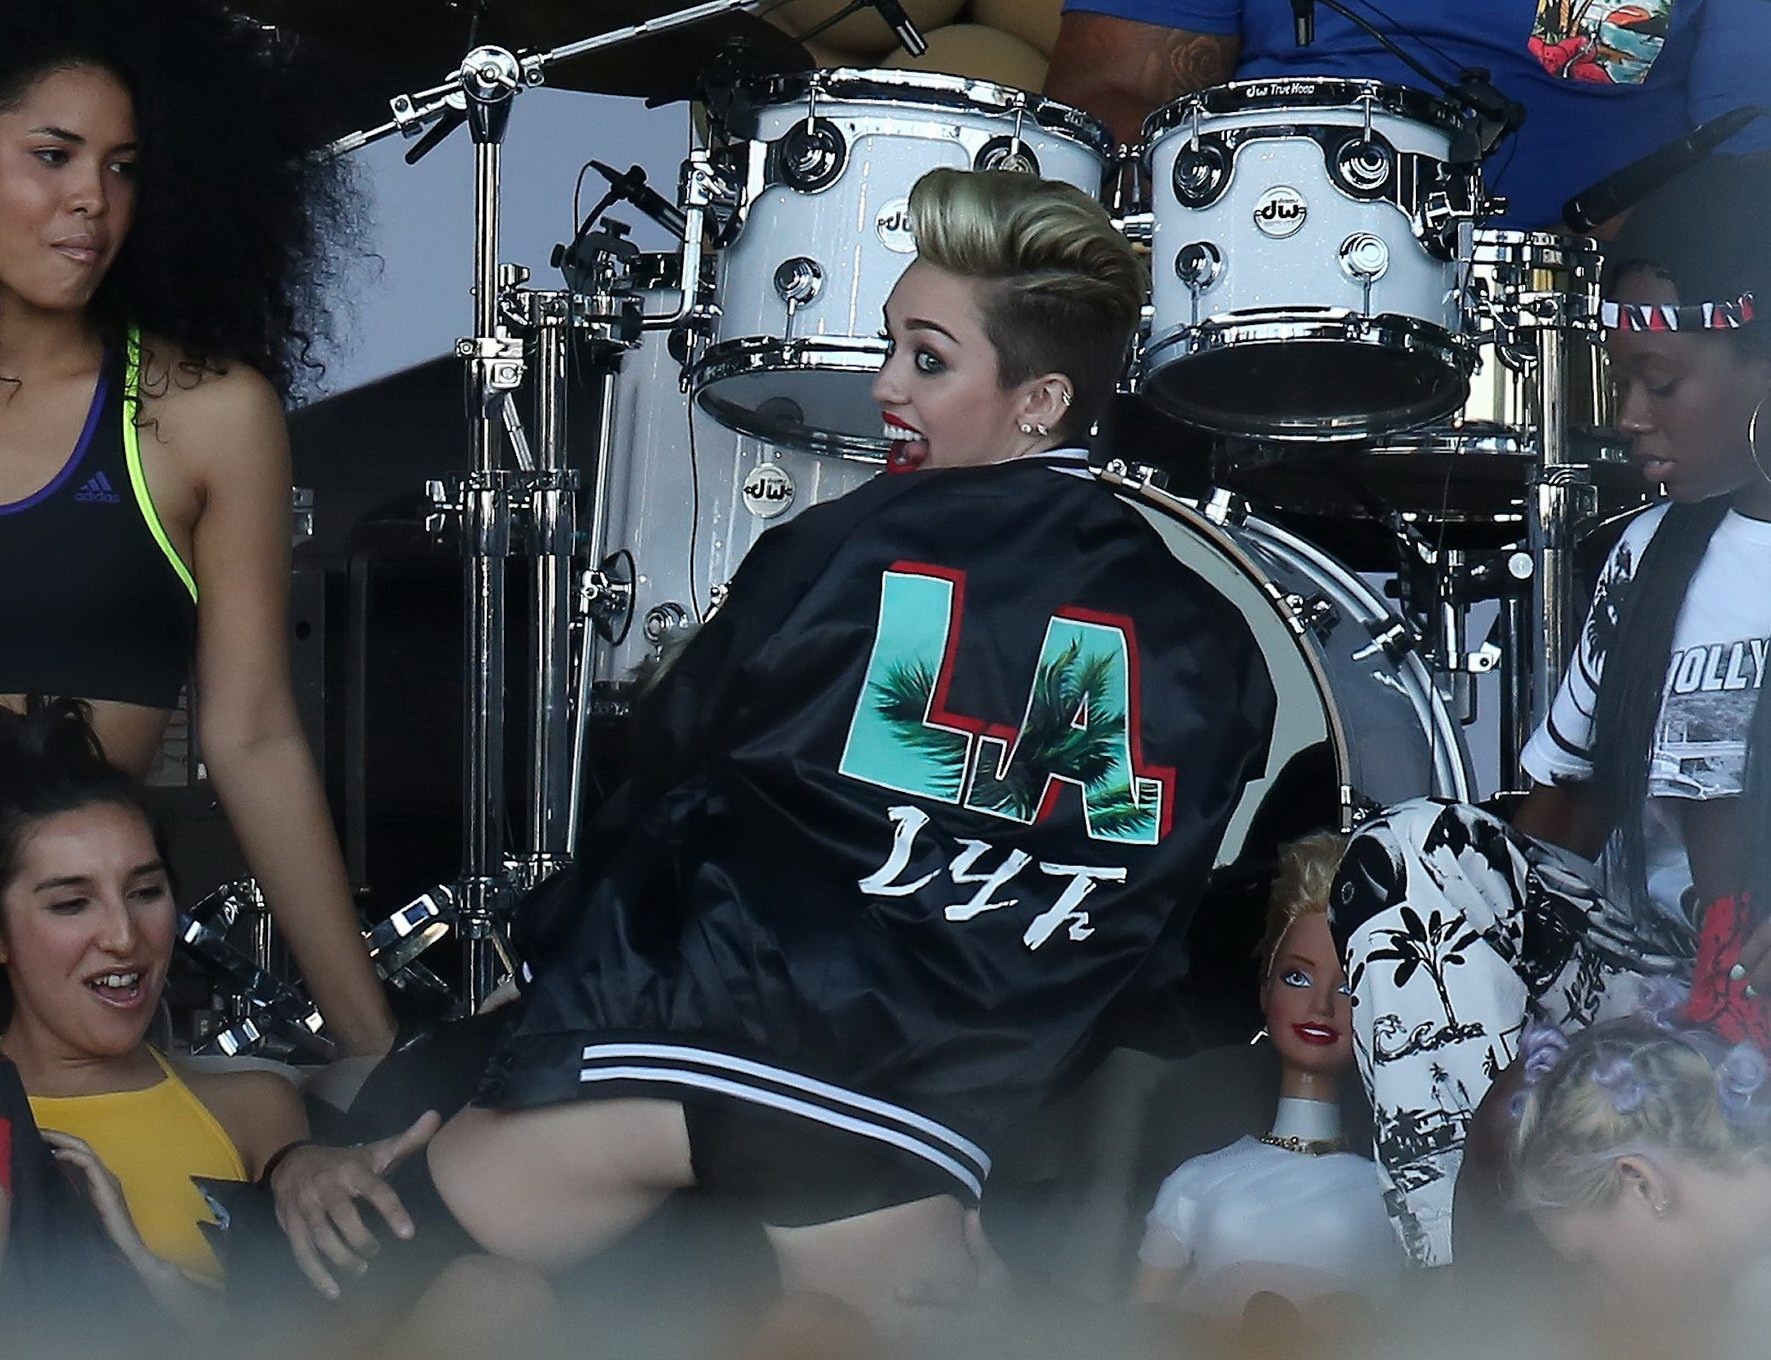 Miley cyrus in mutandine stivali fuck-me esibendosi al jimmy kimmel show
 #75226995